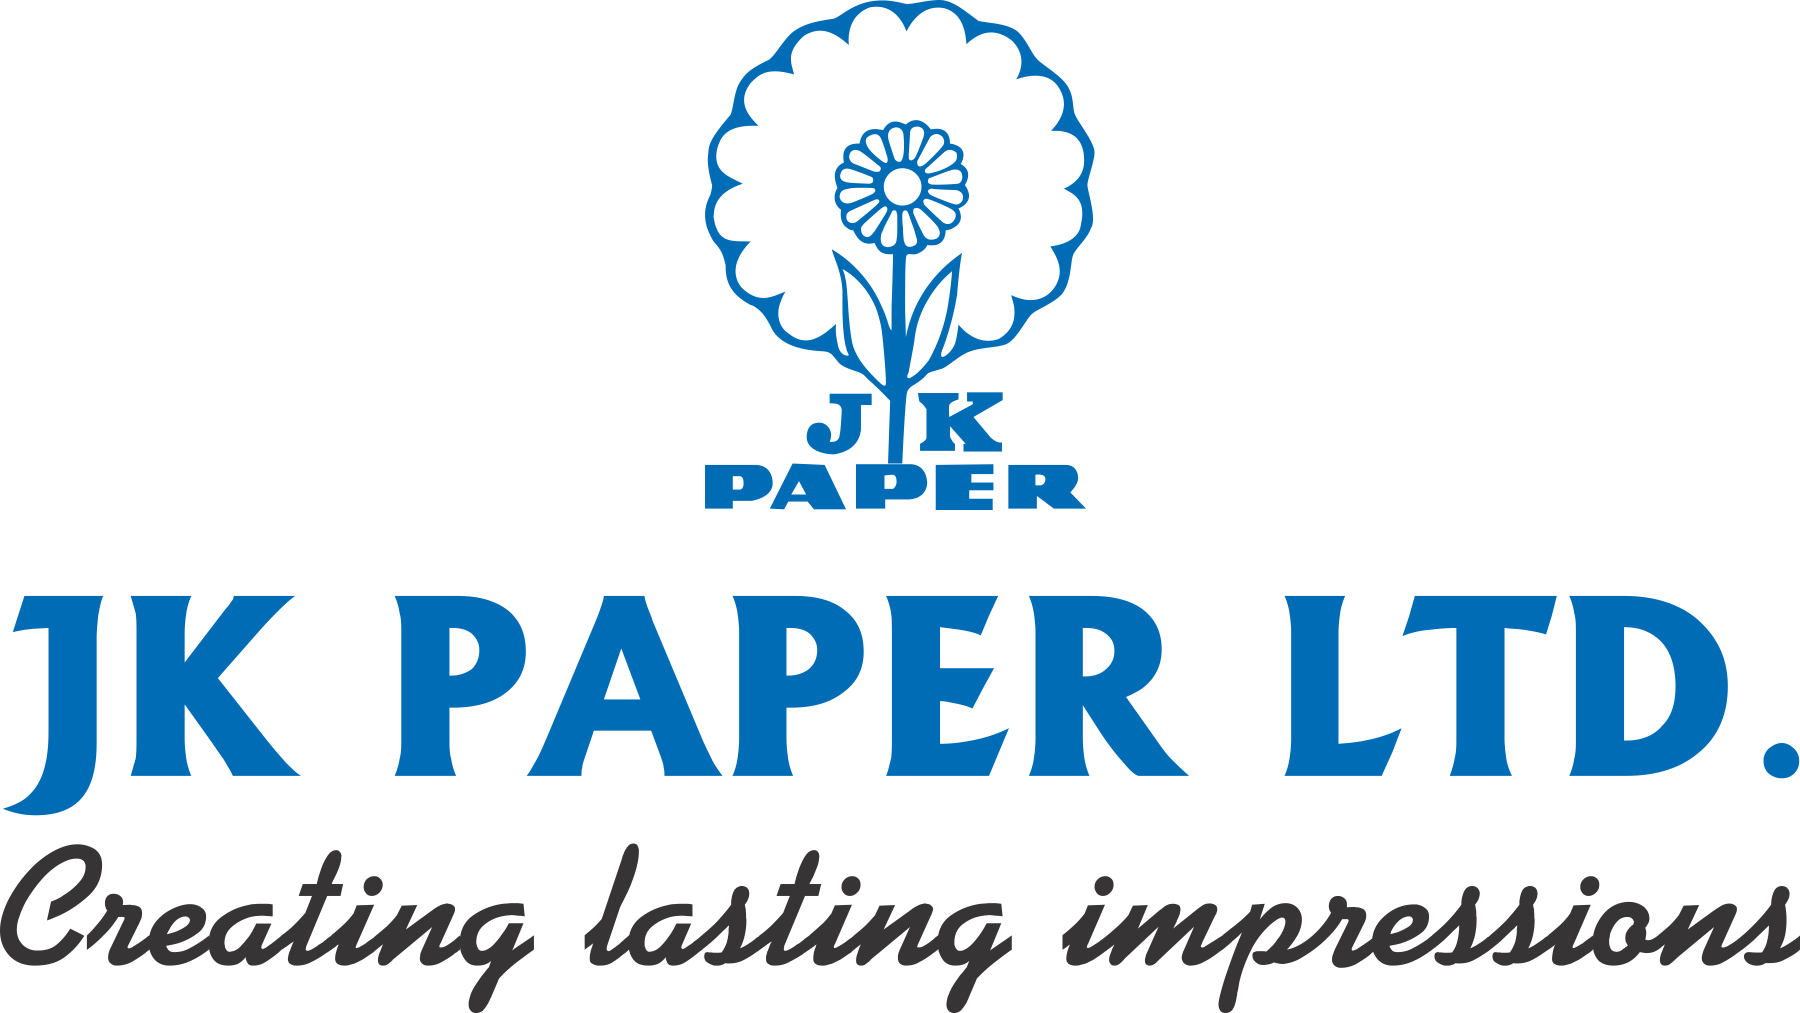 Hyssop Paper Industry Brand Design — Ultigraph Designs